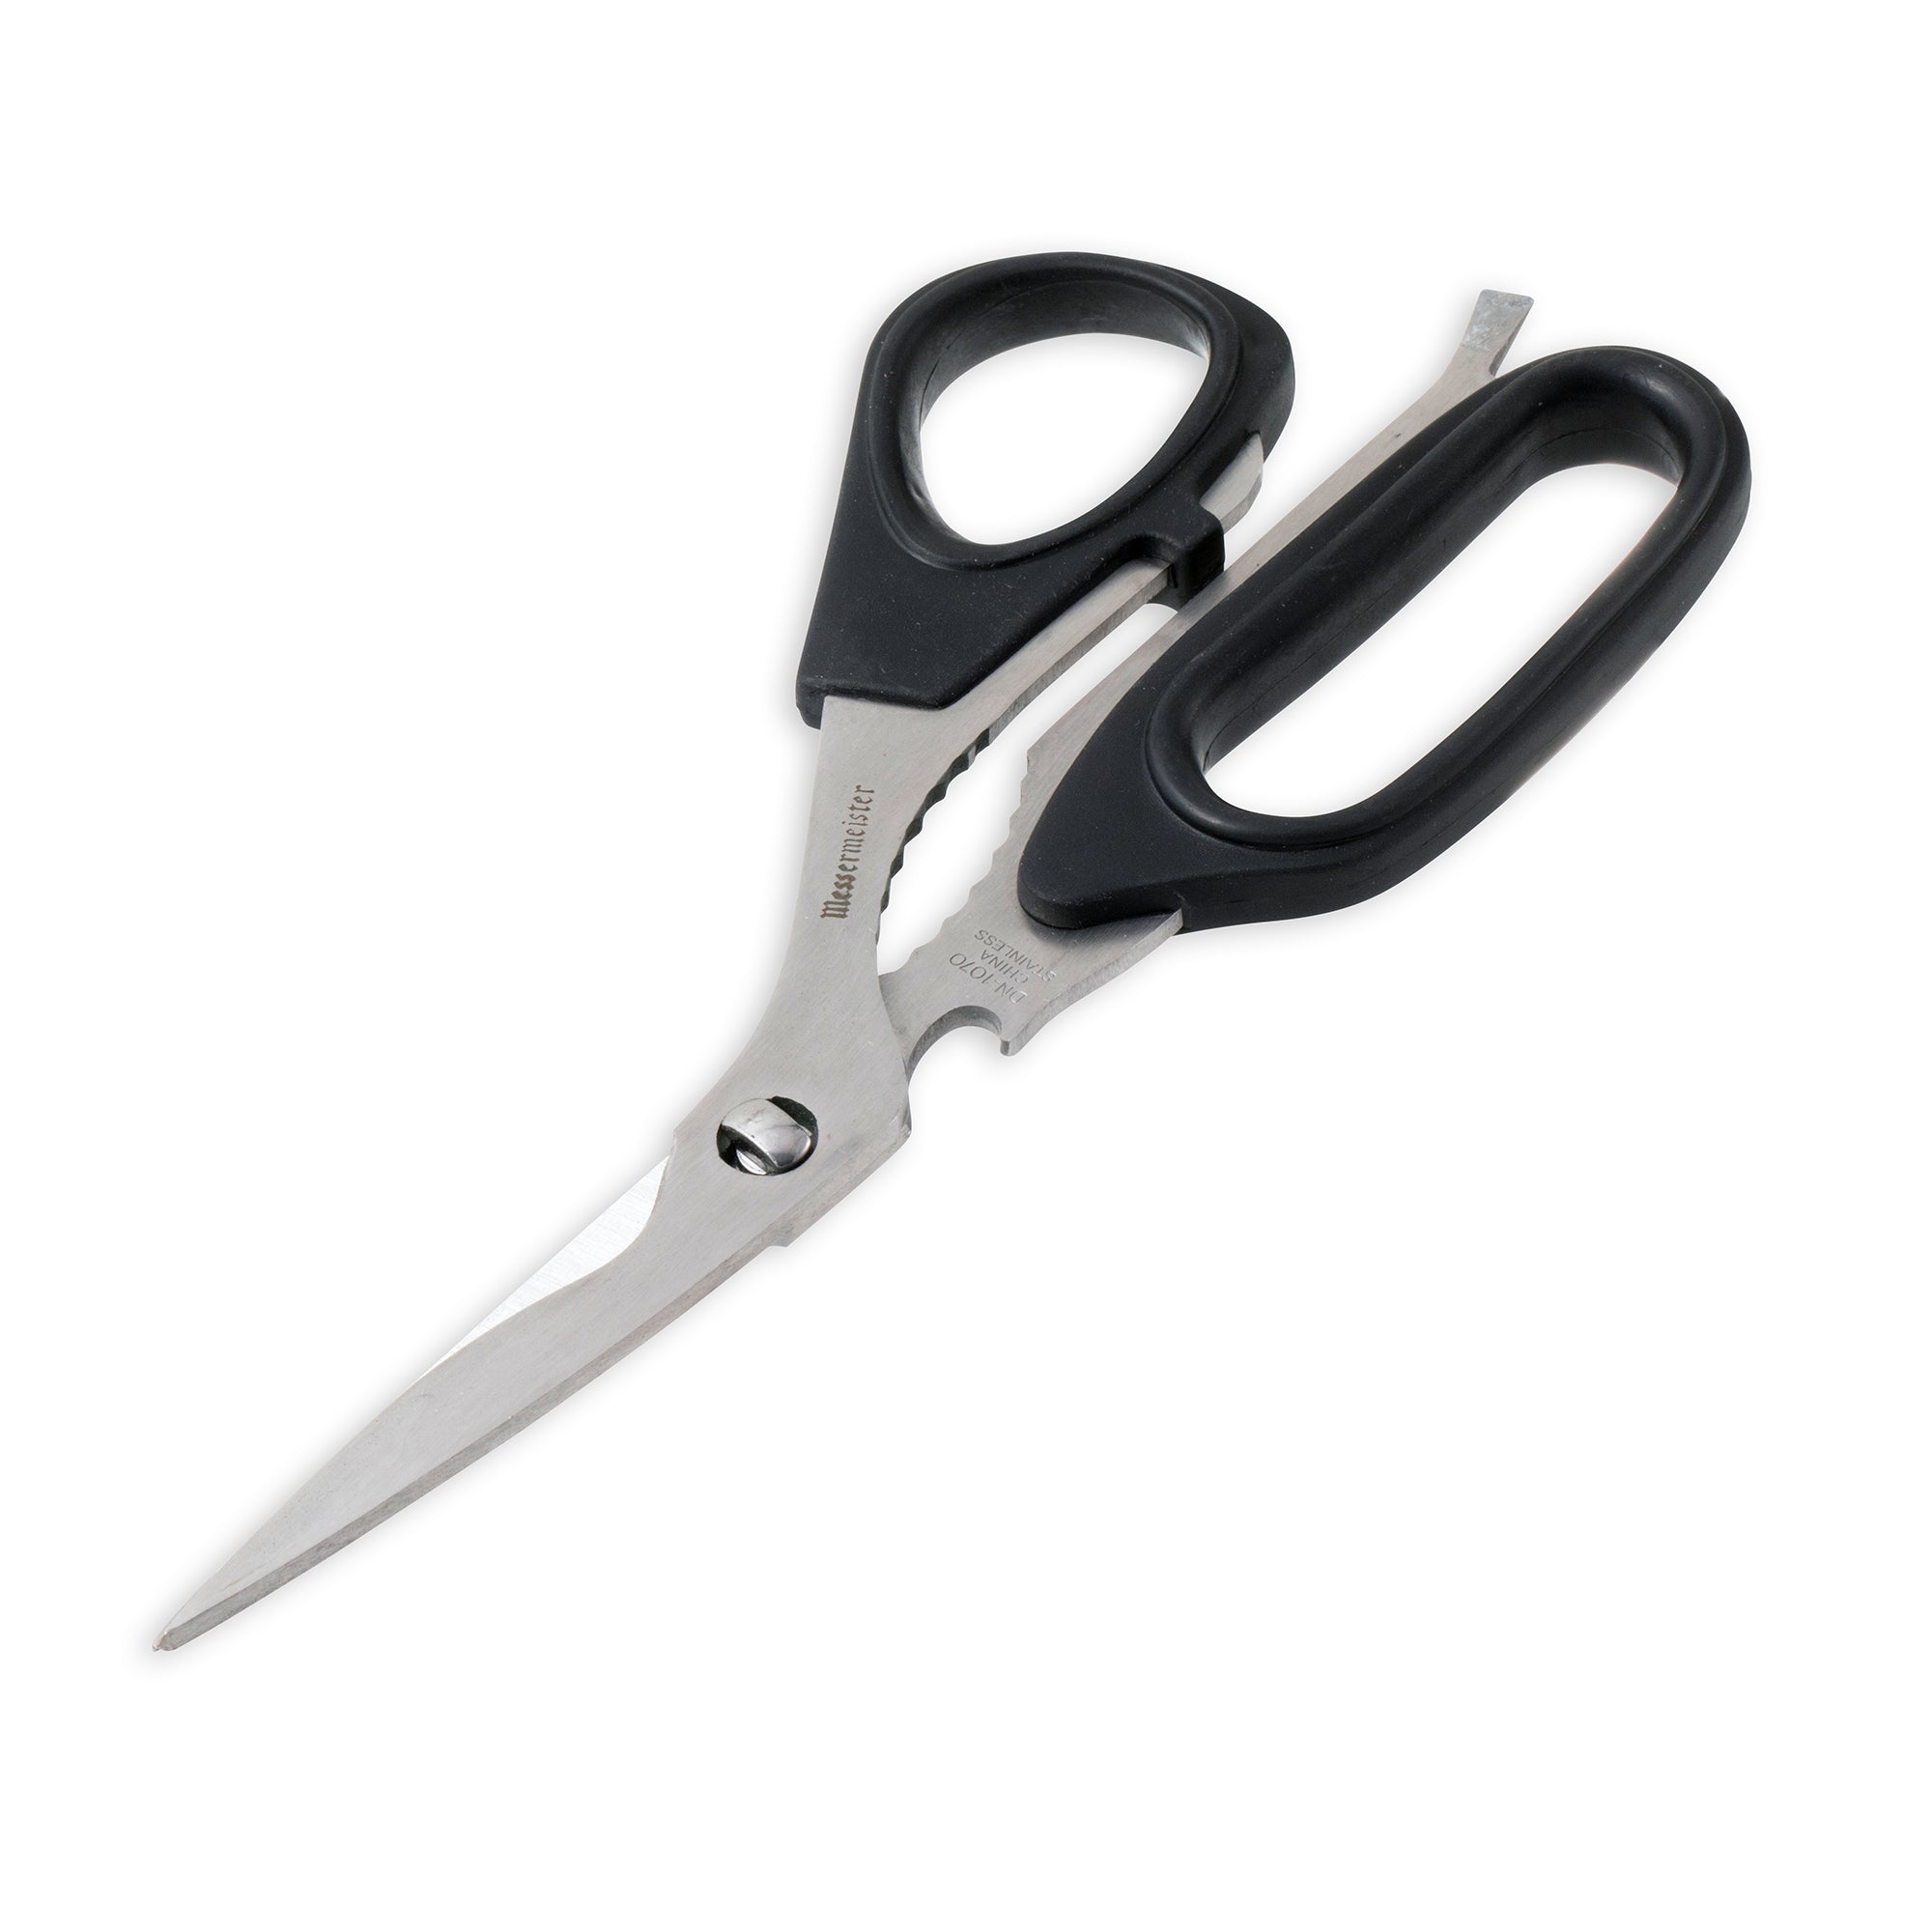 ☀️Shun DM7300 Multi-Purpose Shears, Heavy Duty Take-Apart Kitchen Scissors